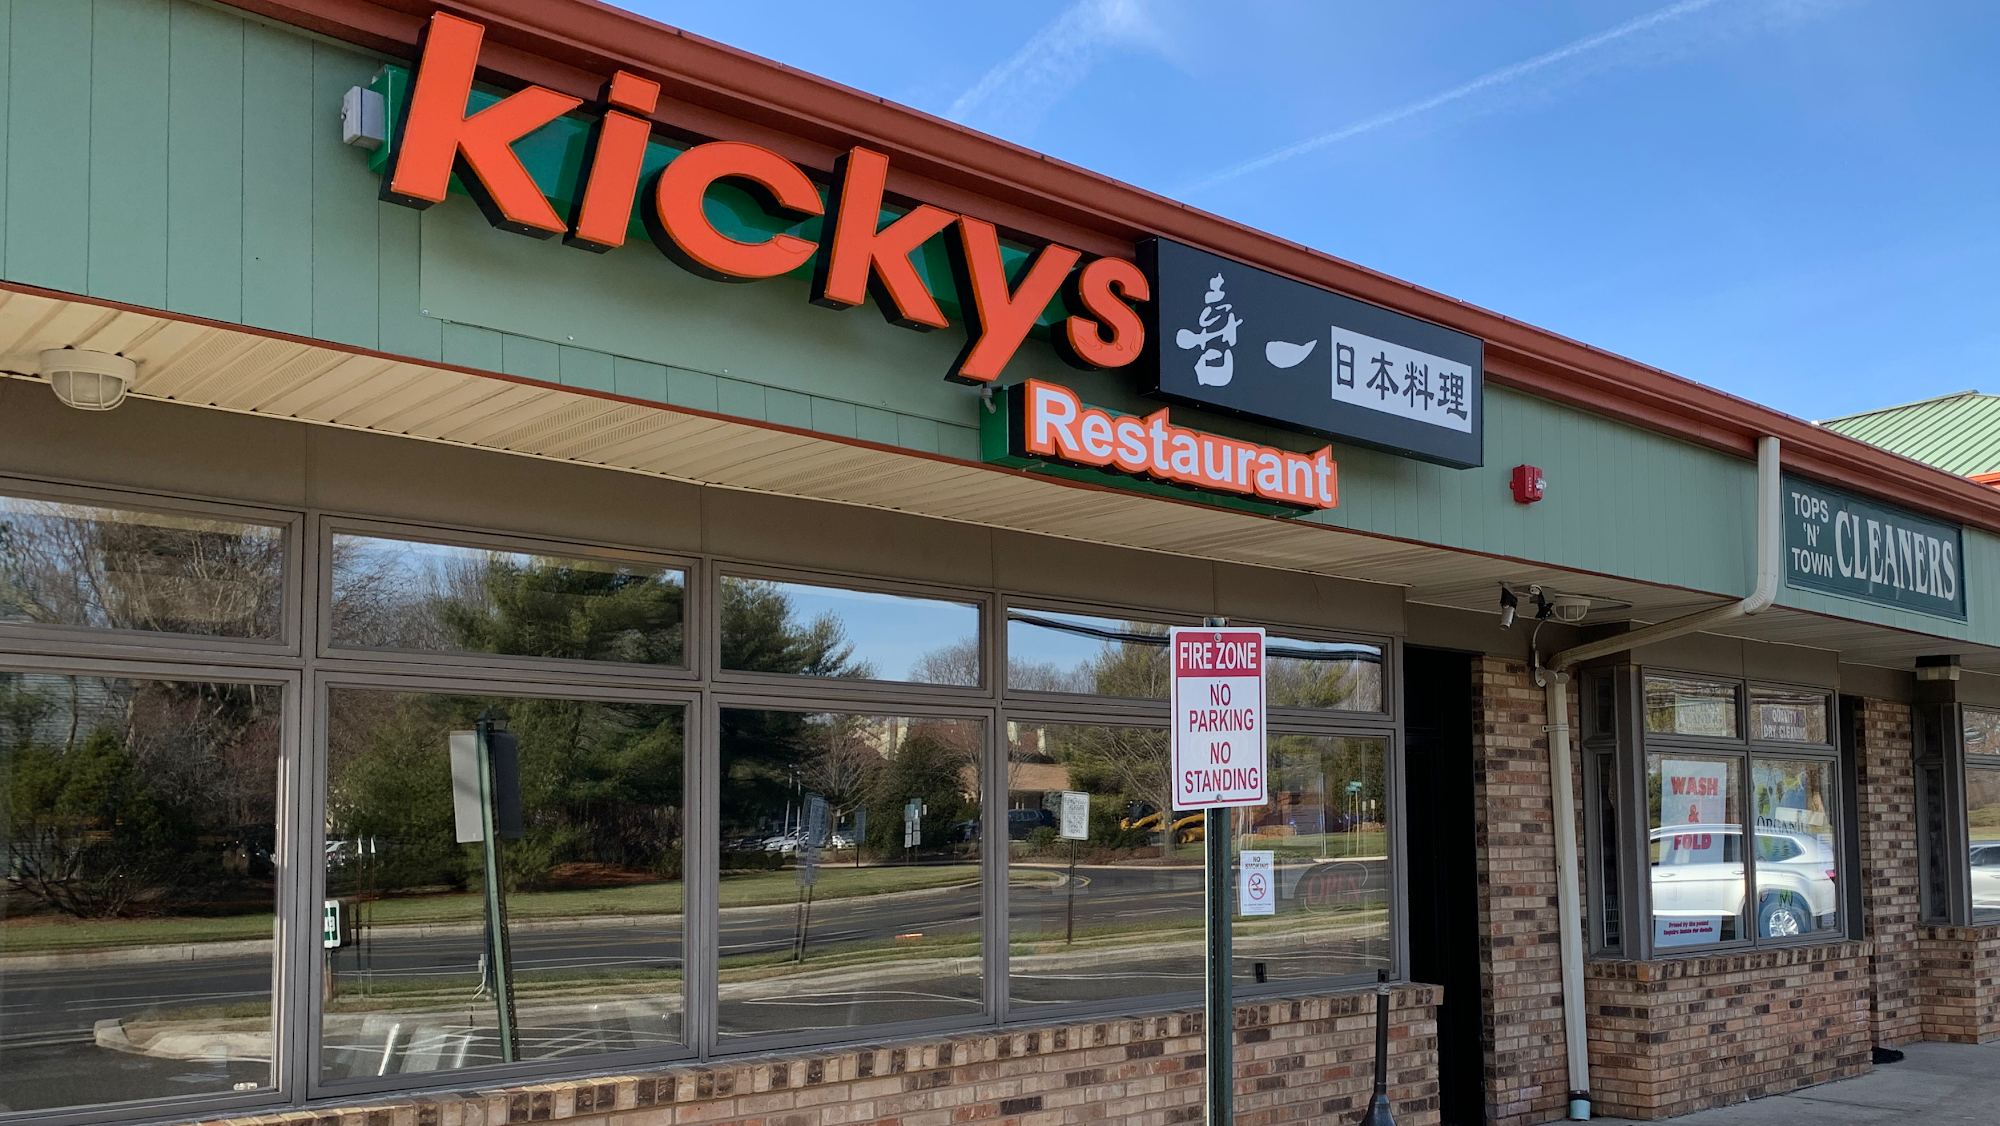 Kickys Restaurant